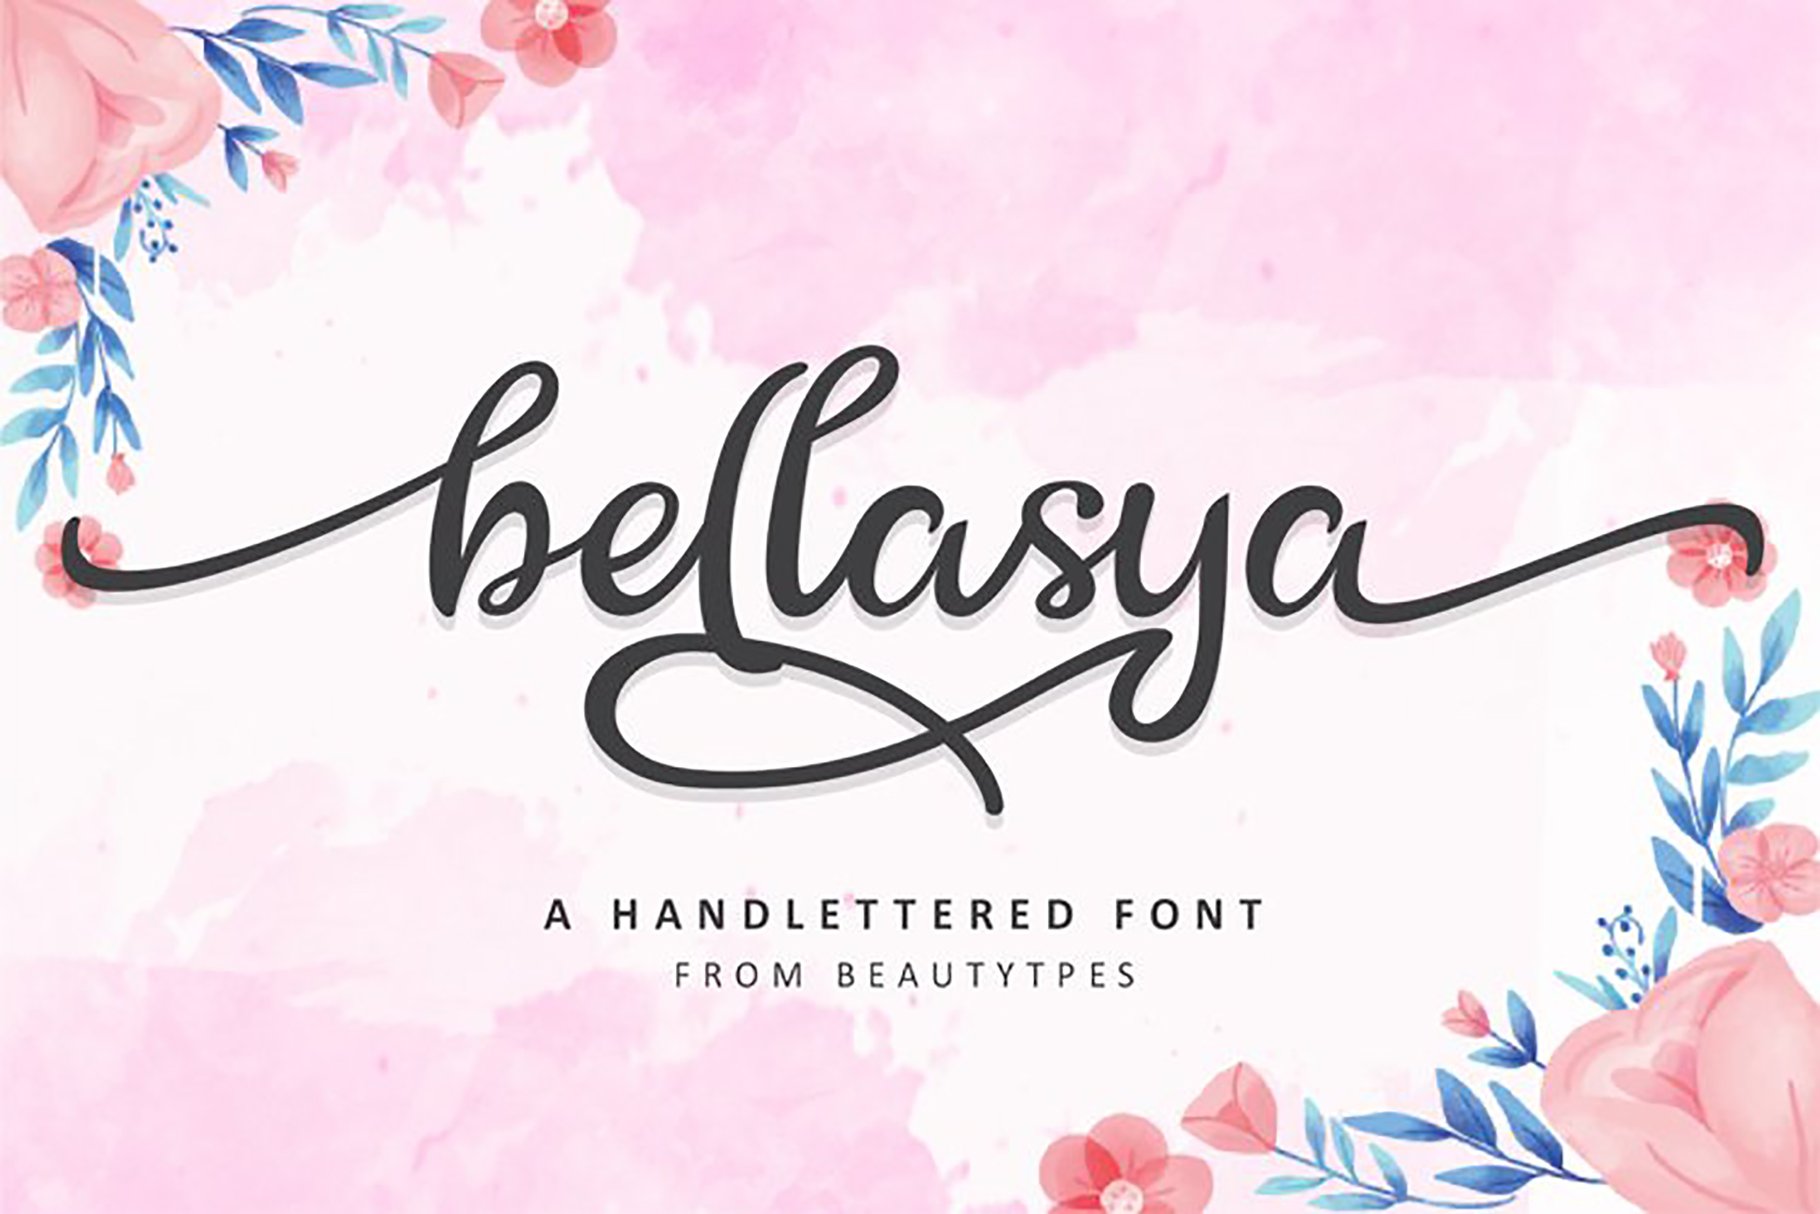 Bellasya | a handwriten font cover image.